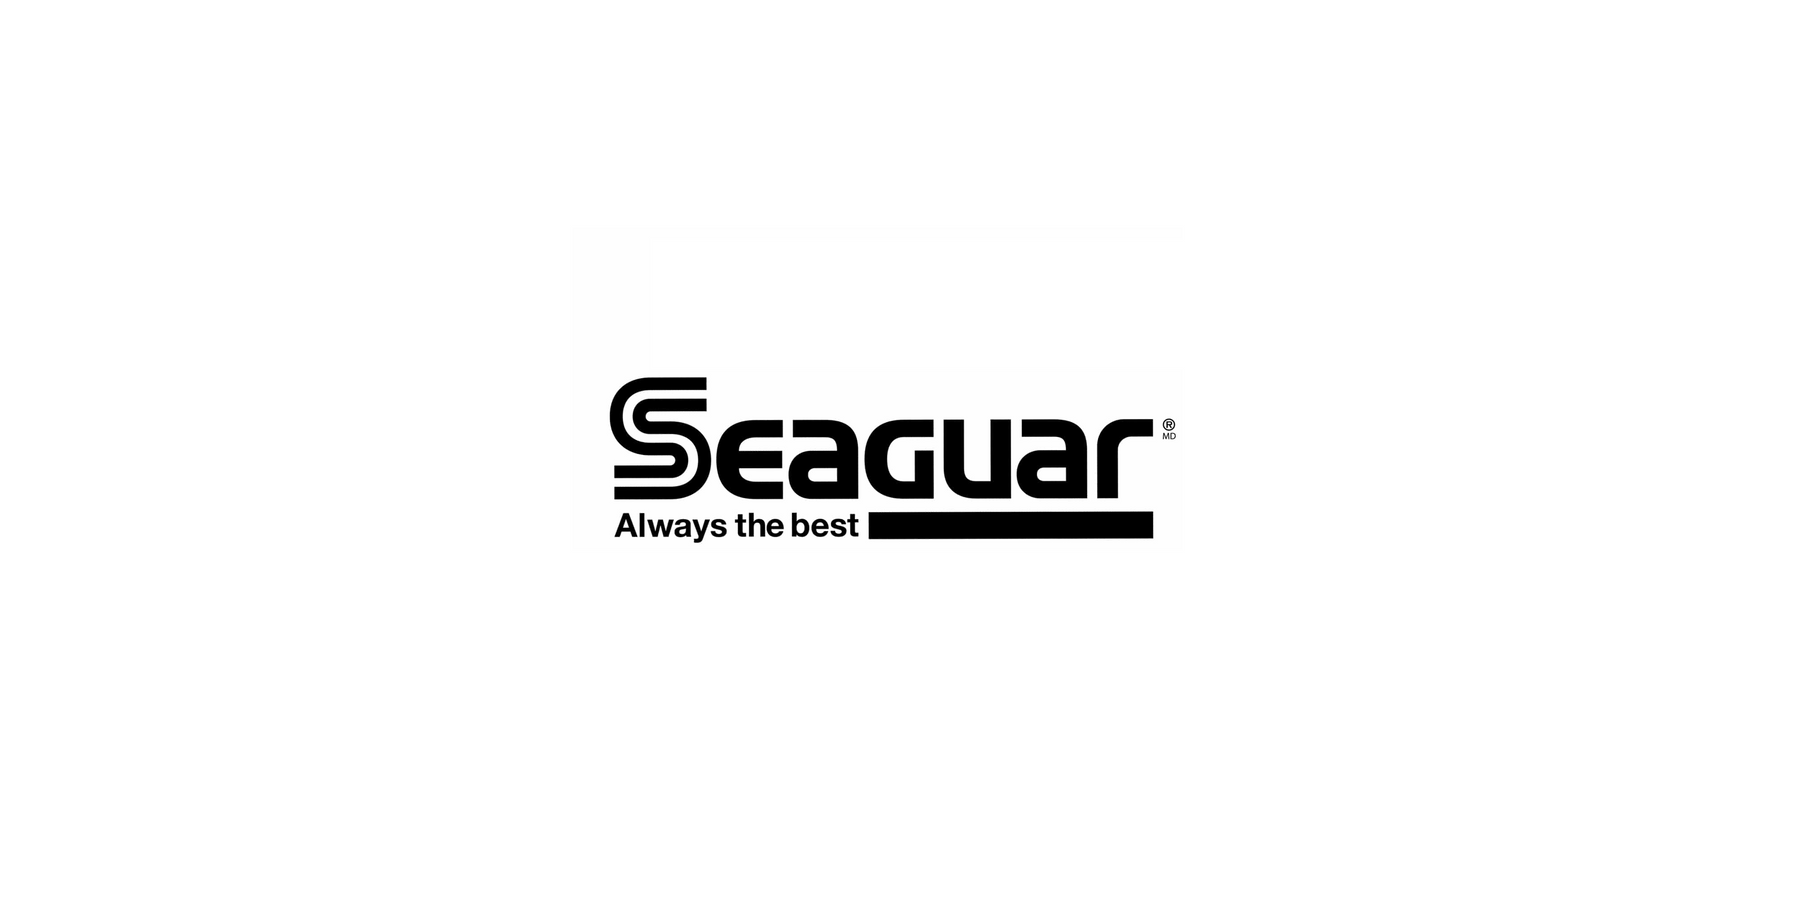 Seaguar Logo on a white background